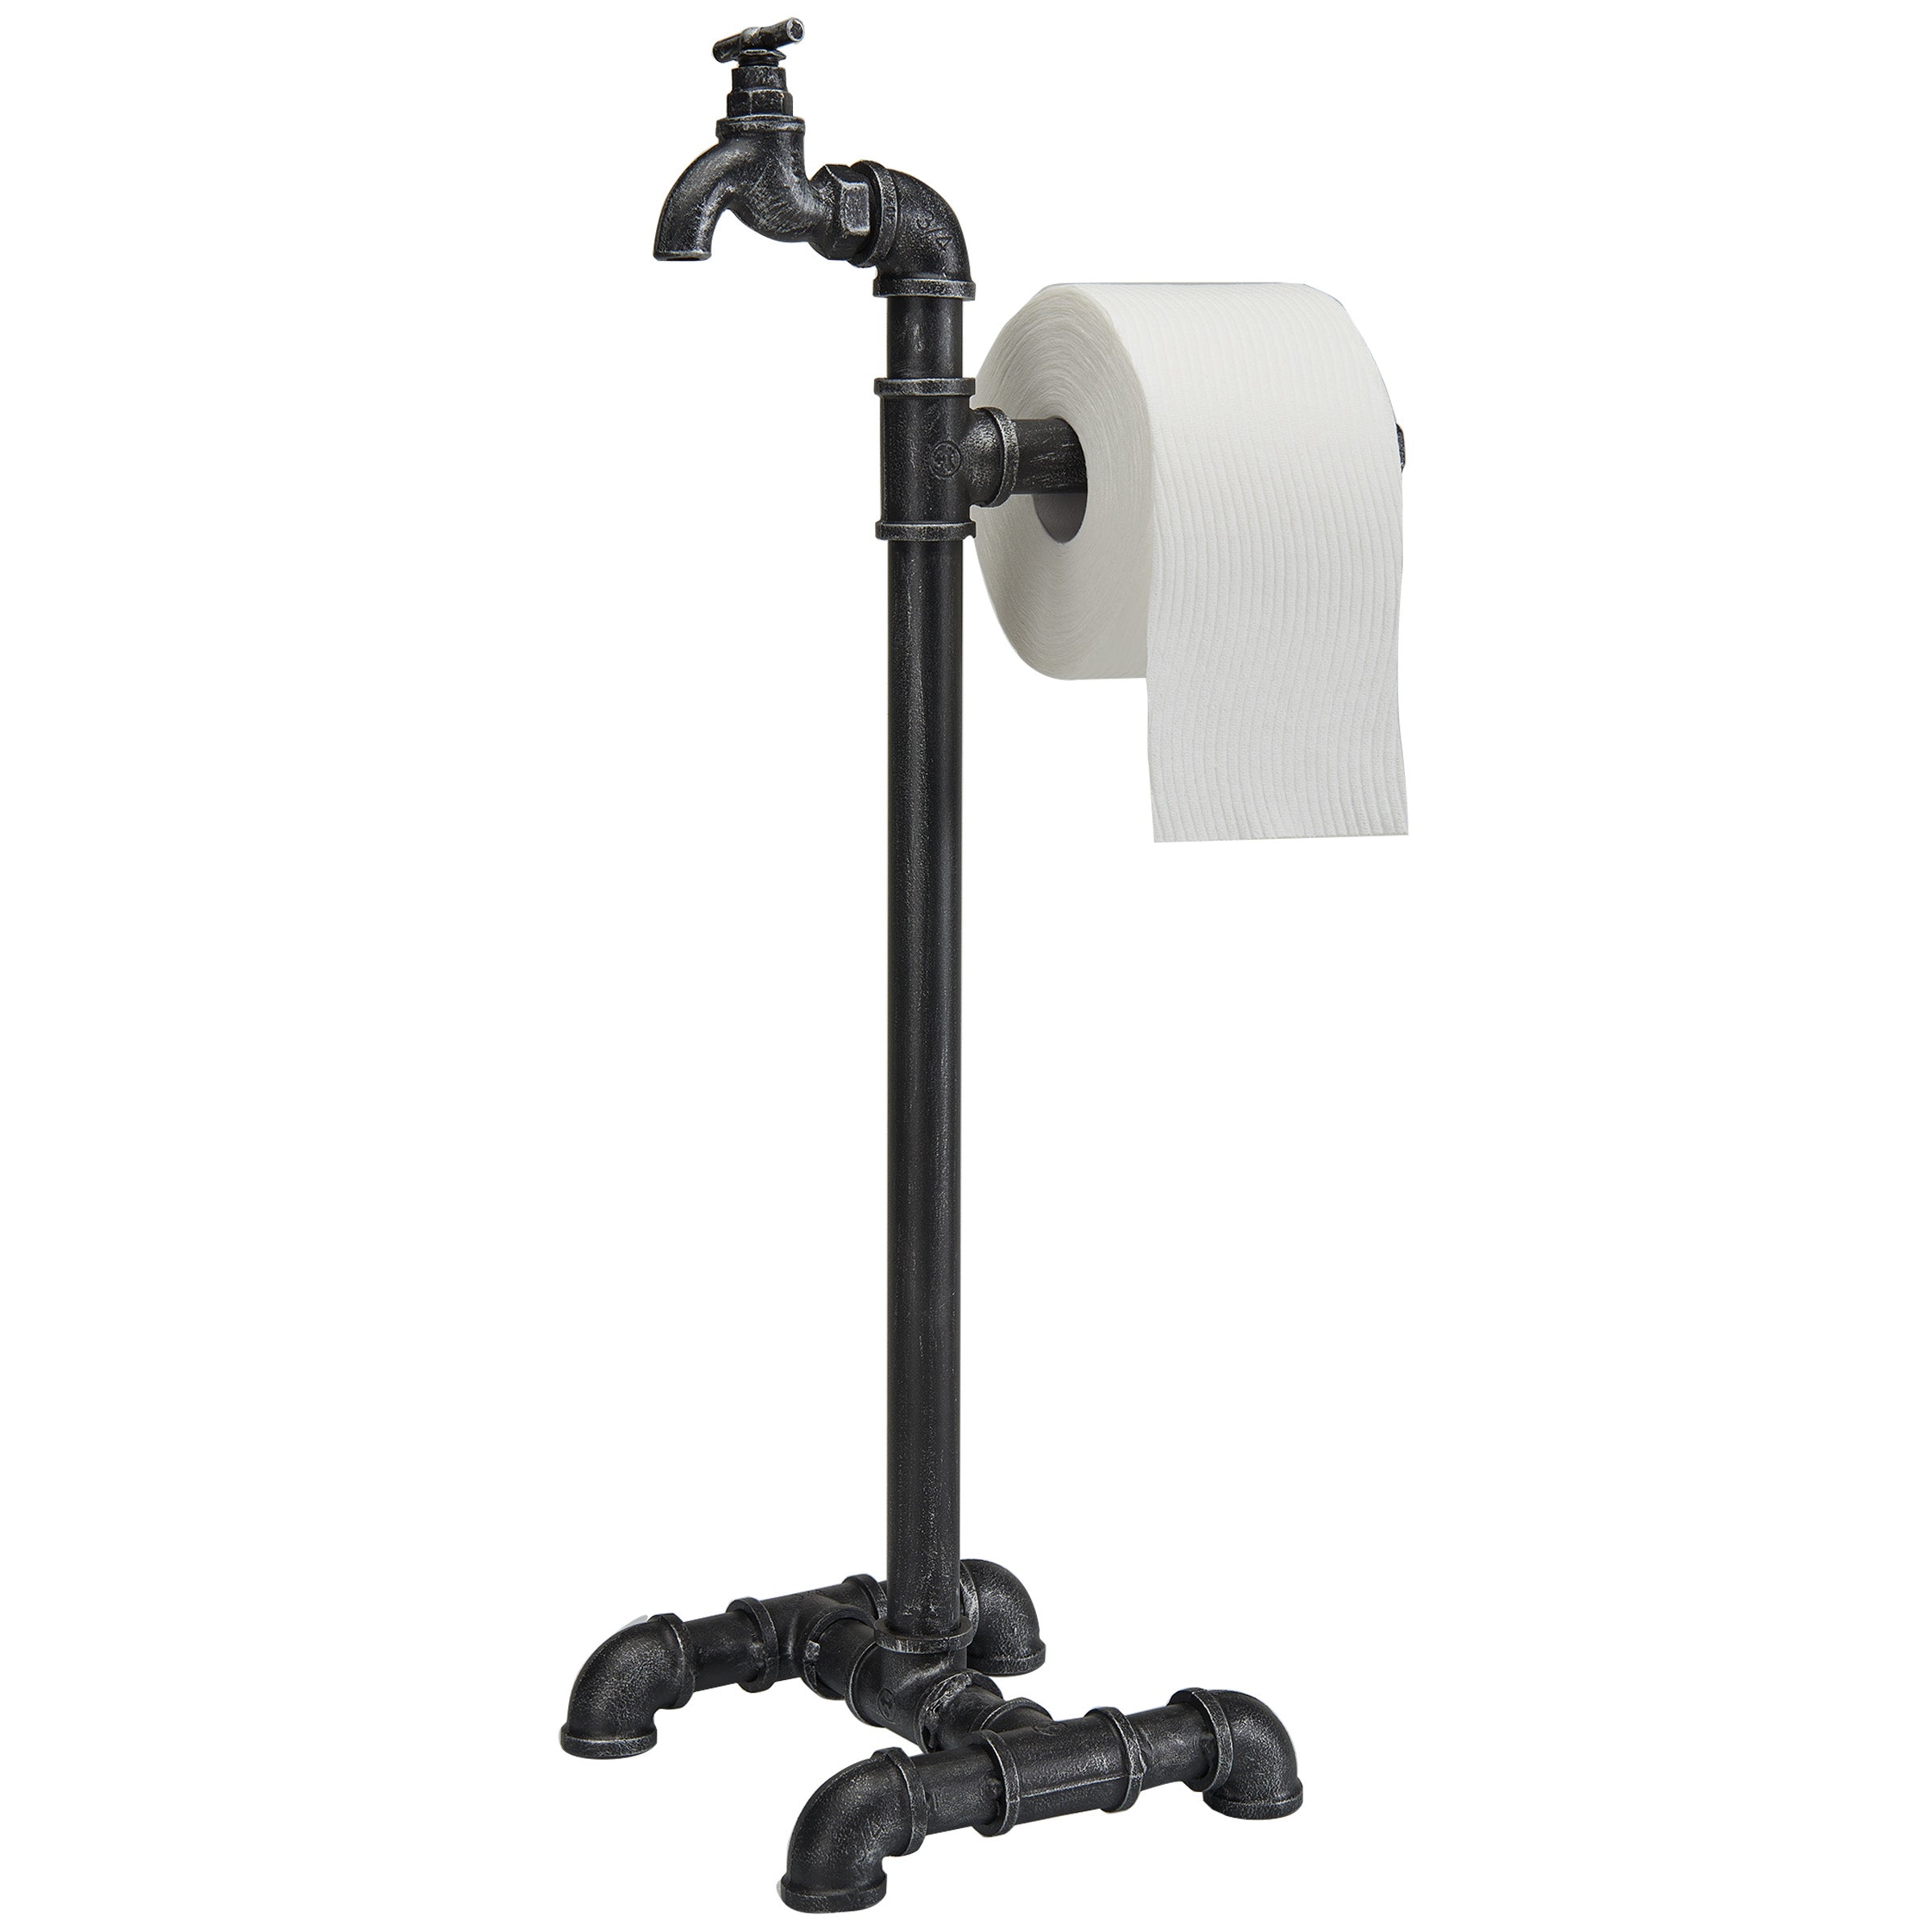 Freestanding Toilet Paper Holder Stand